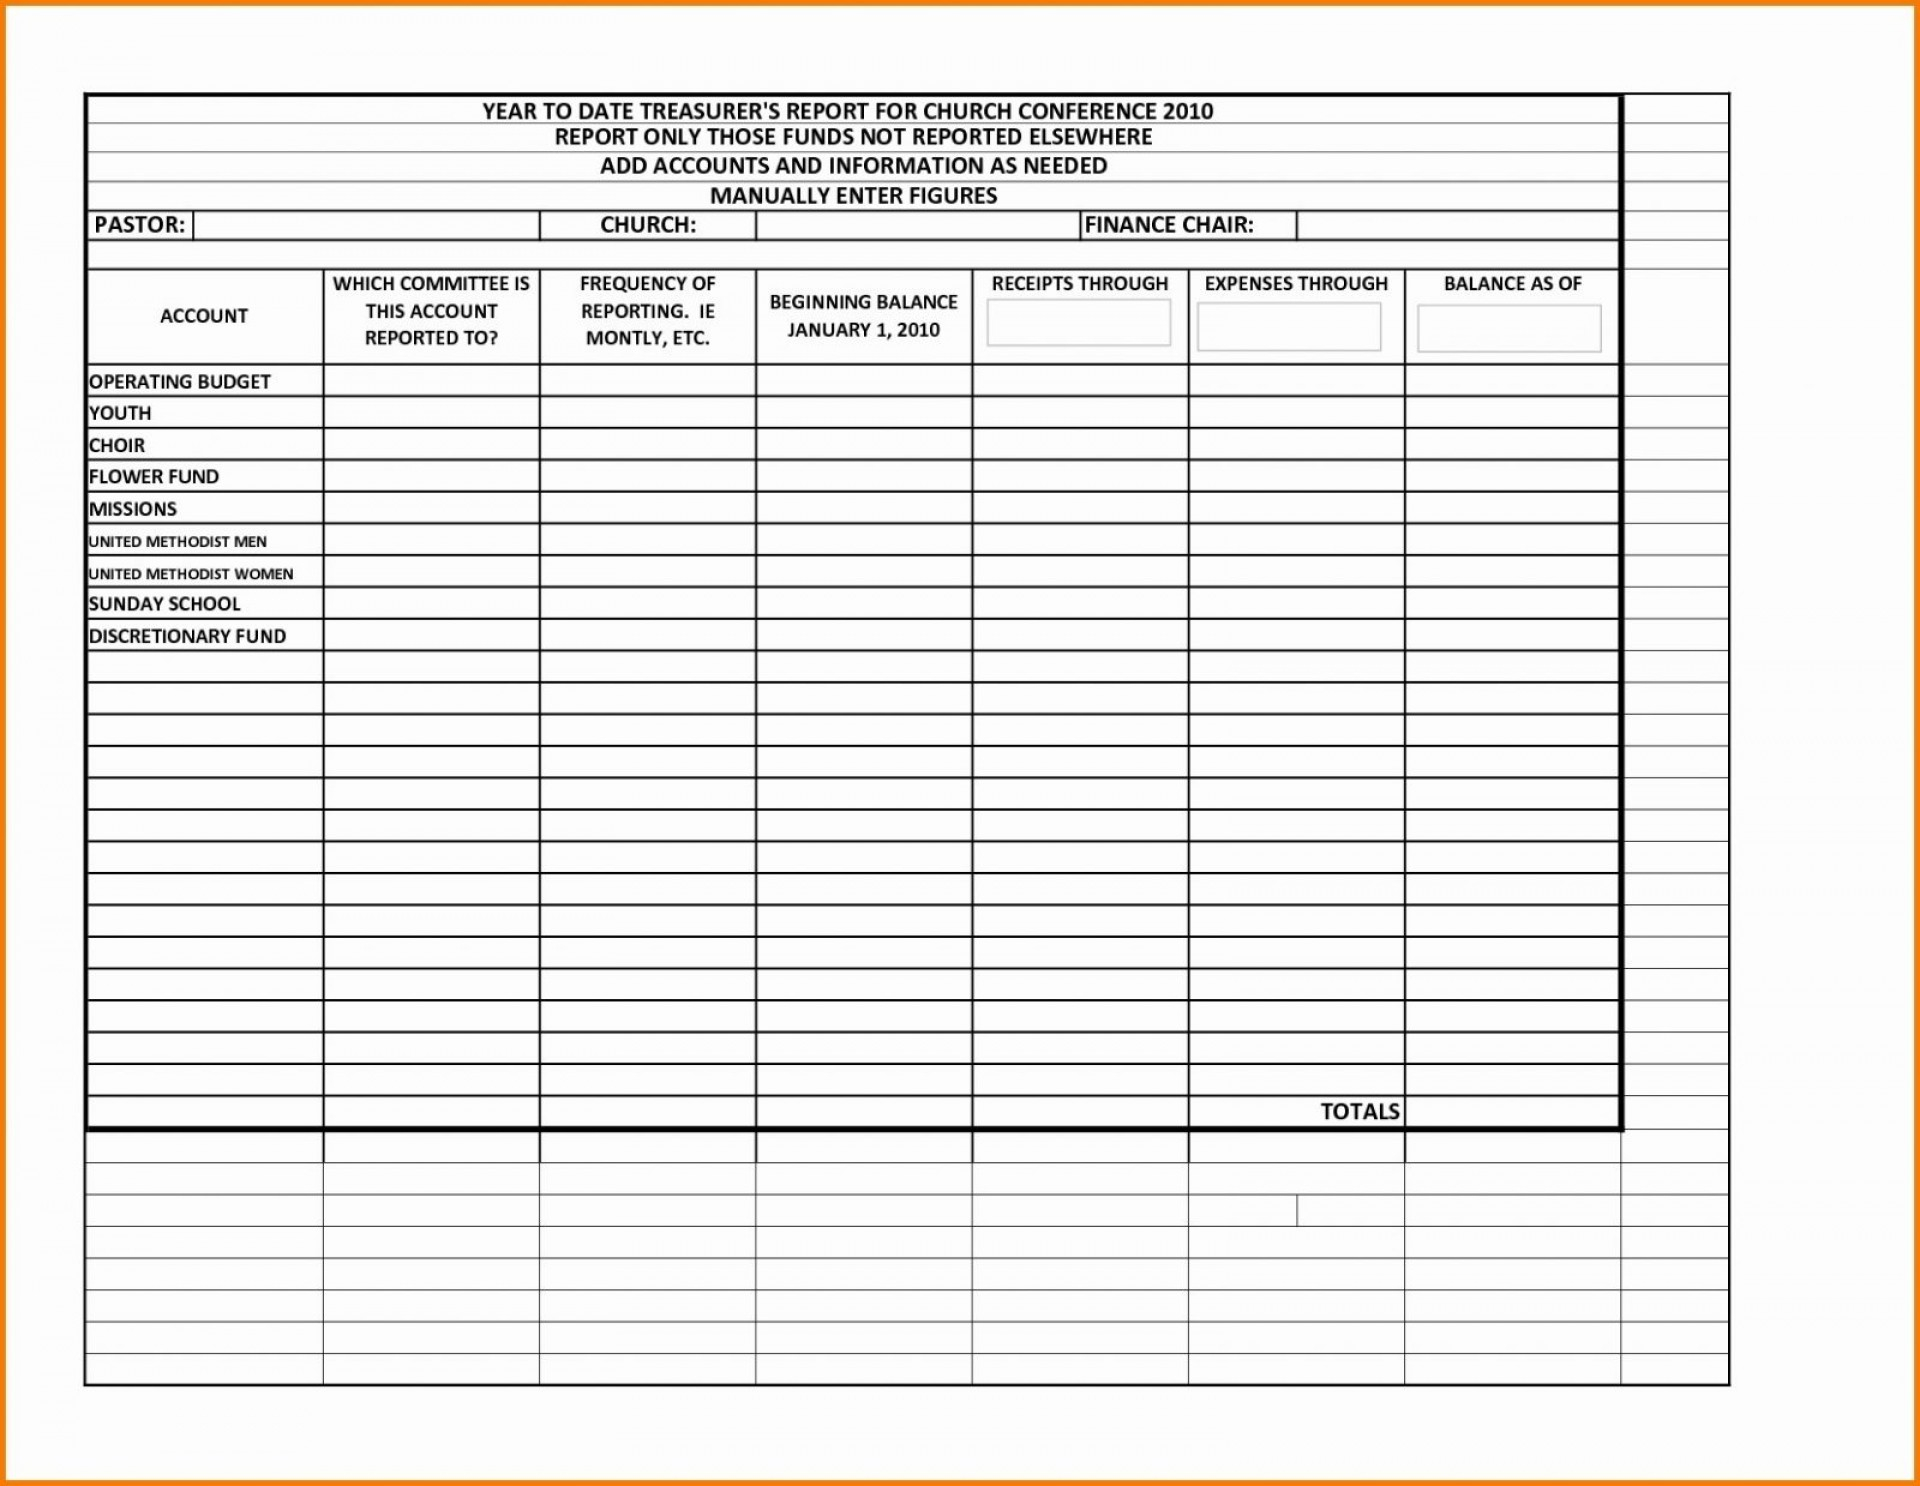 Hoa Budget Spreadsheet Printable Spreadshee hoa budget spreadsheet.